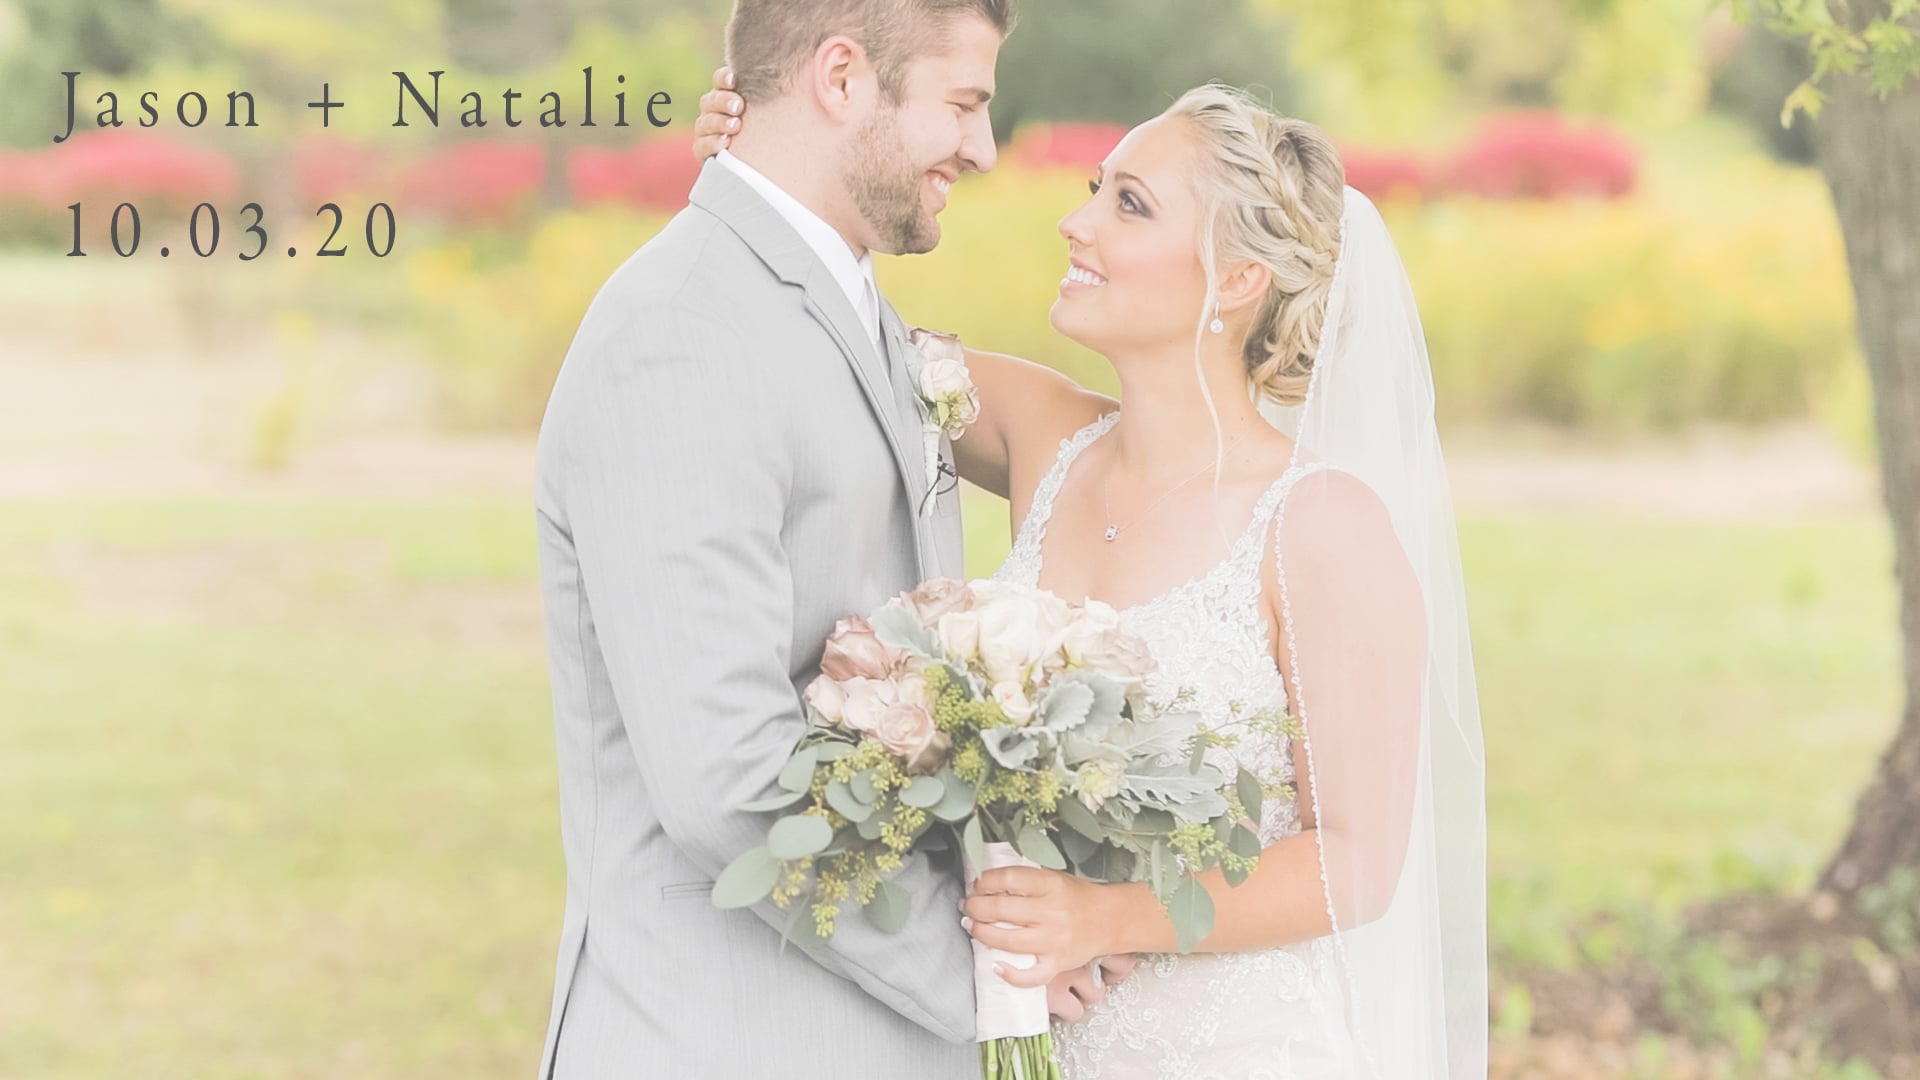 Jason + Natalie Wedding Highlight | Mountain View Country Club